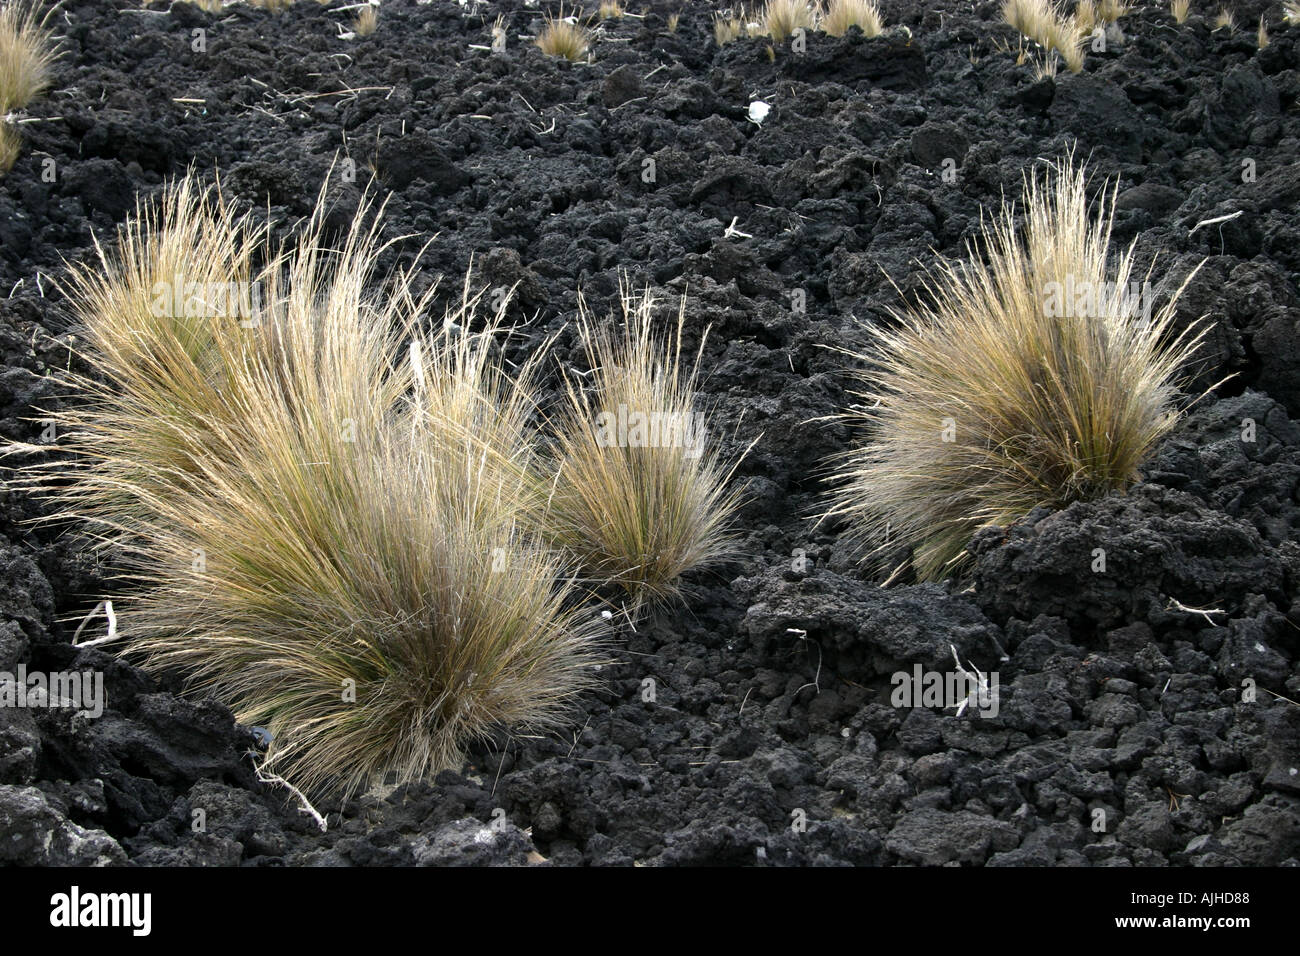 tussock grass growing on volcanic rock Rangitoto Island New Zealand Stock Photo